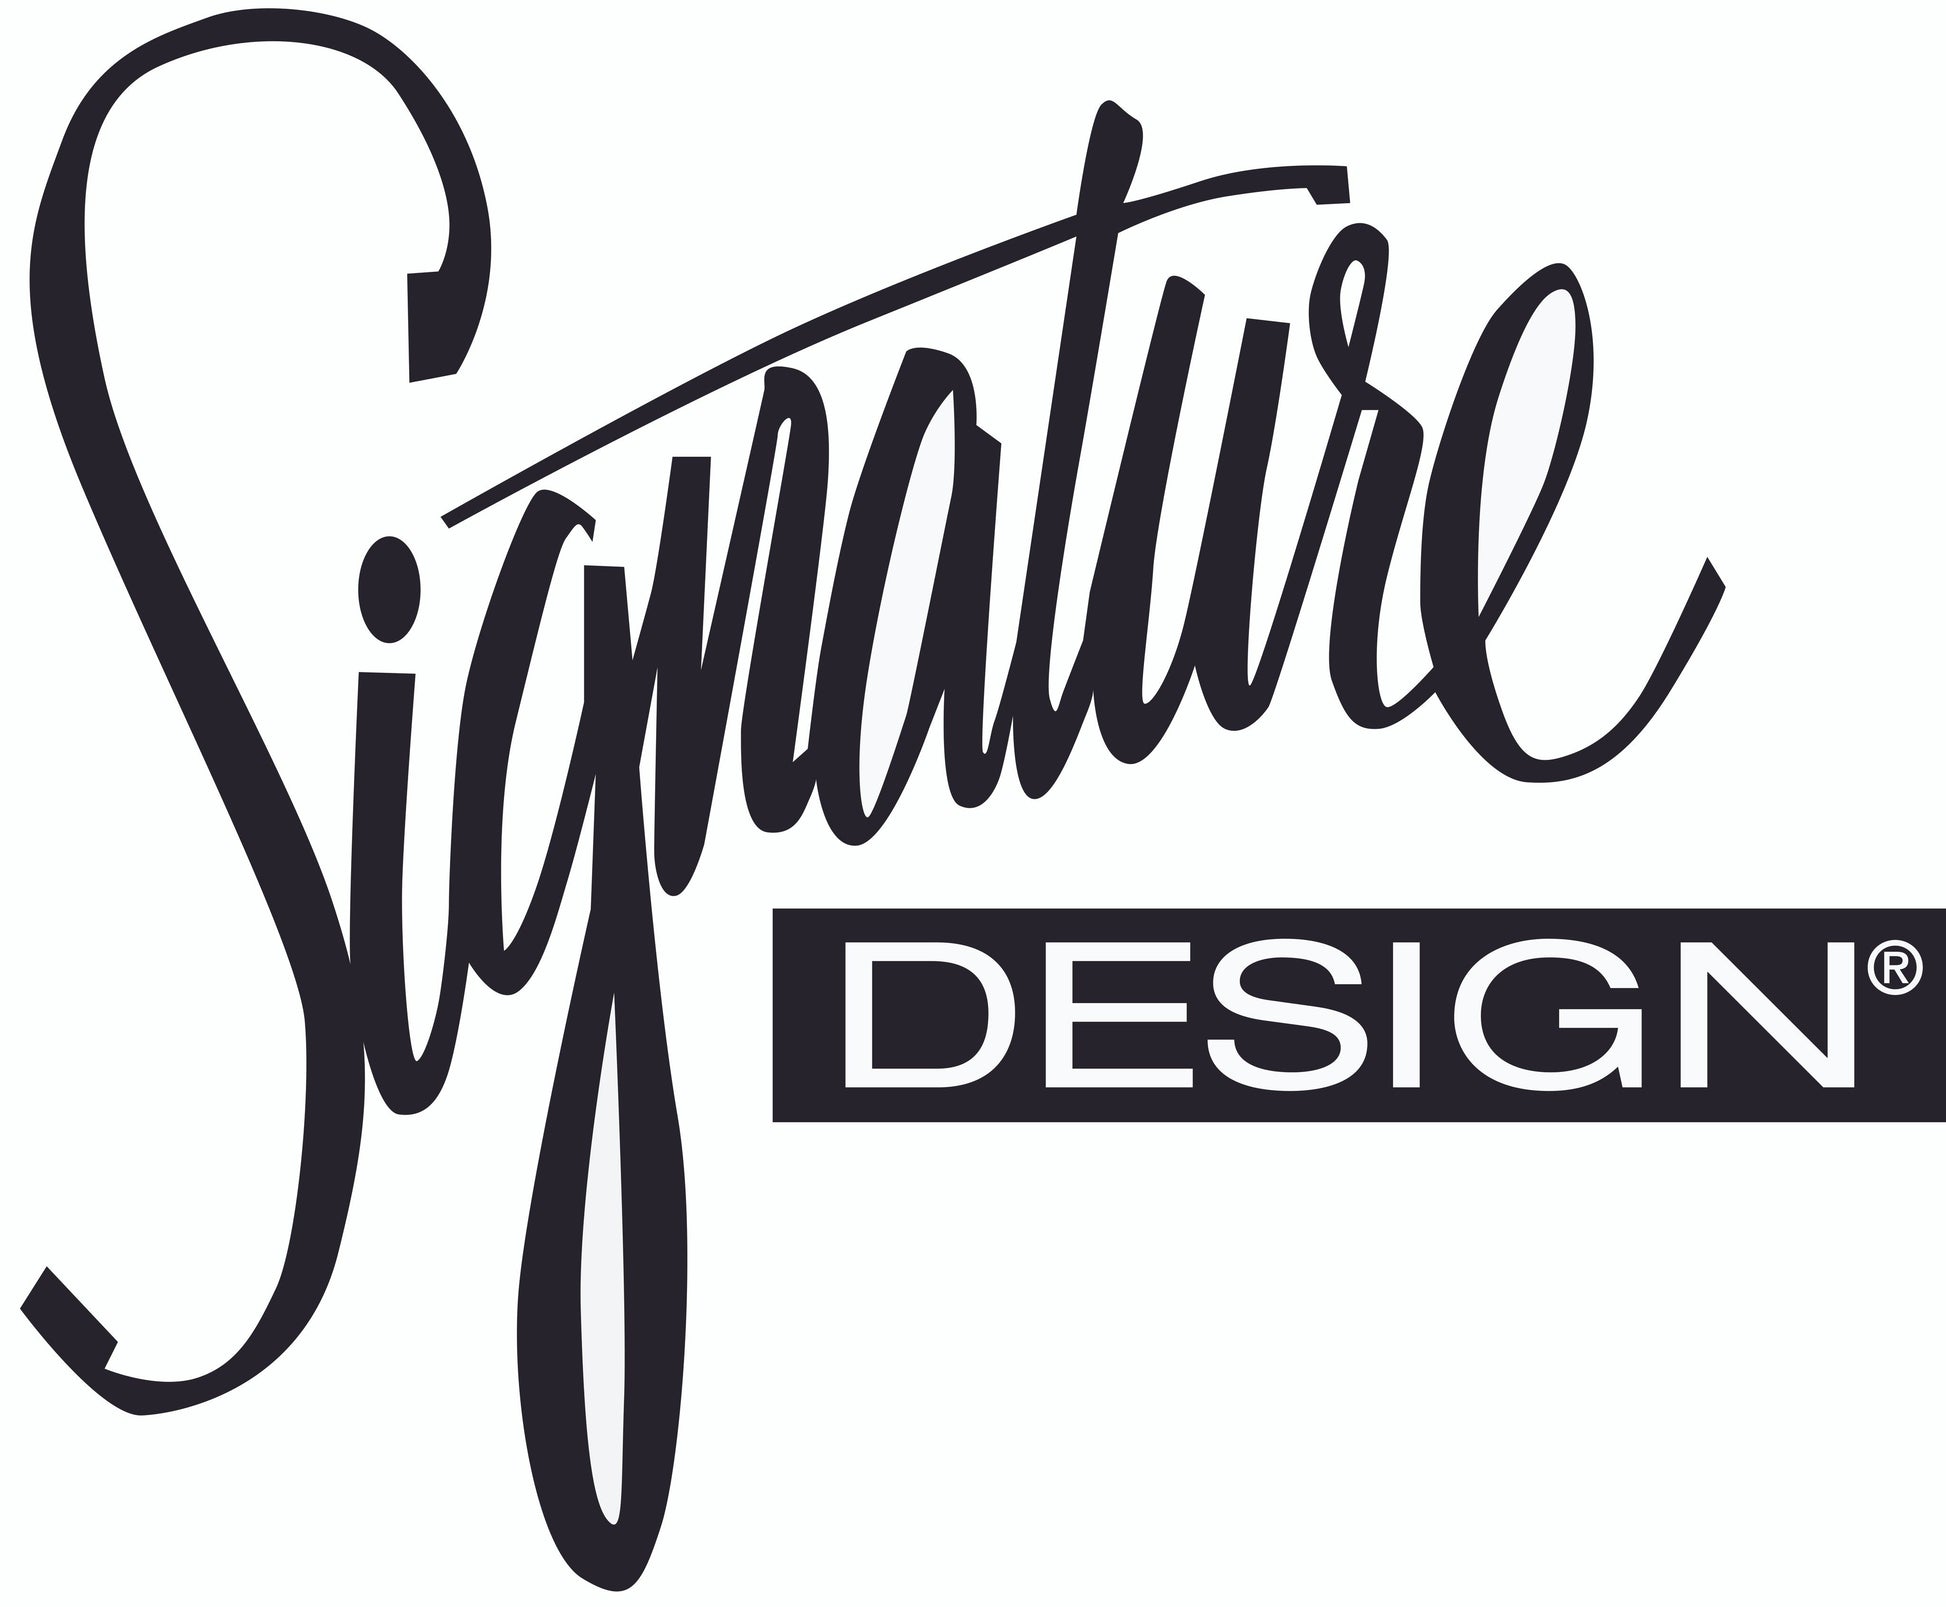 Anarasia Six Drawer Dresser Signature Design by Ashley®